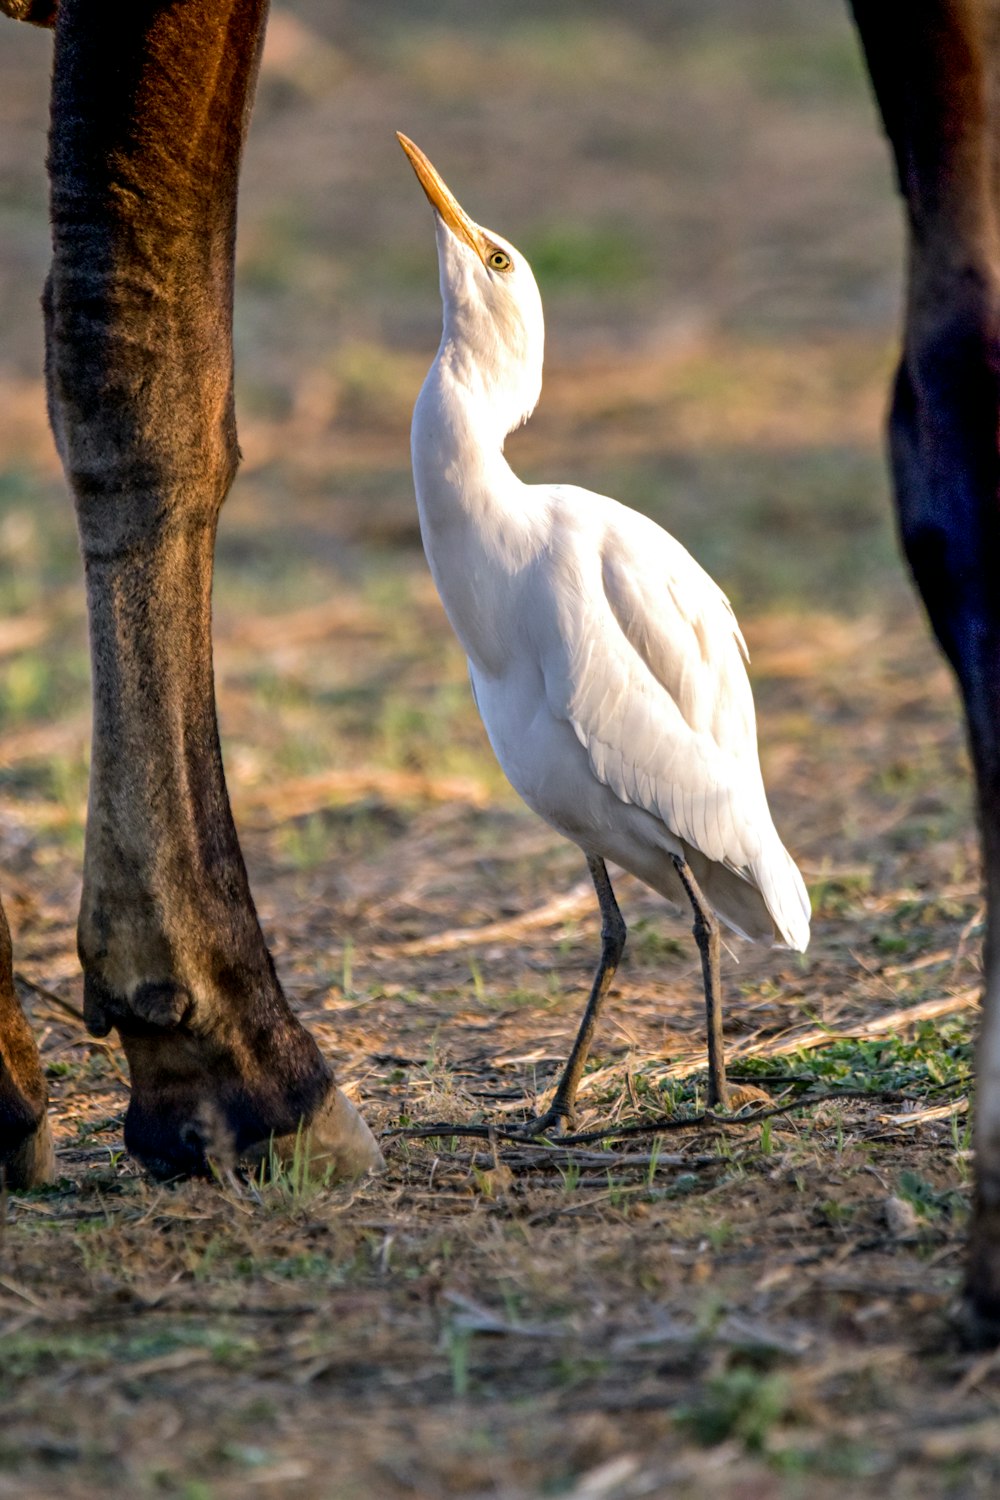 a white bird standing next to a brown horse